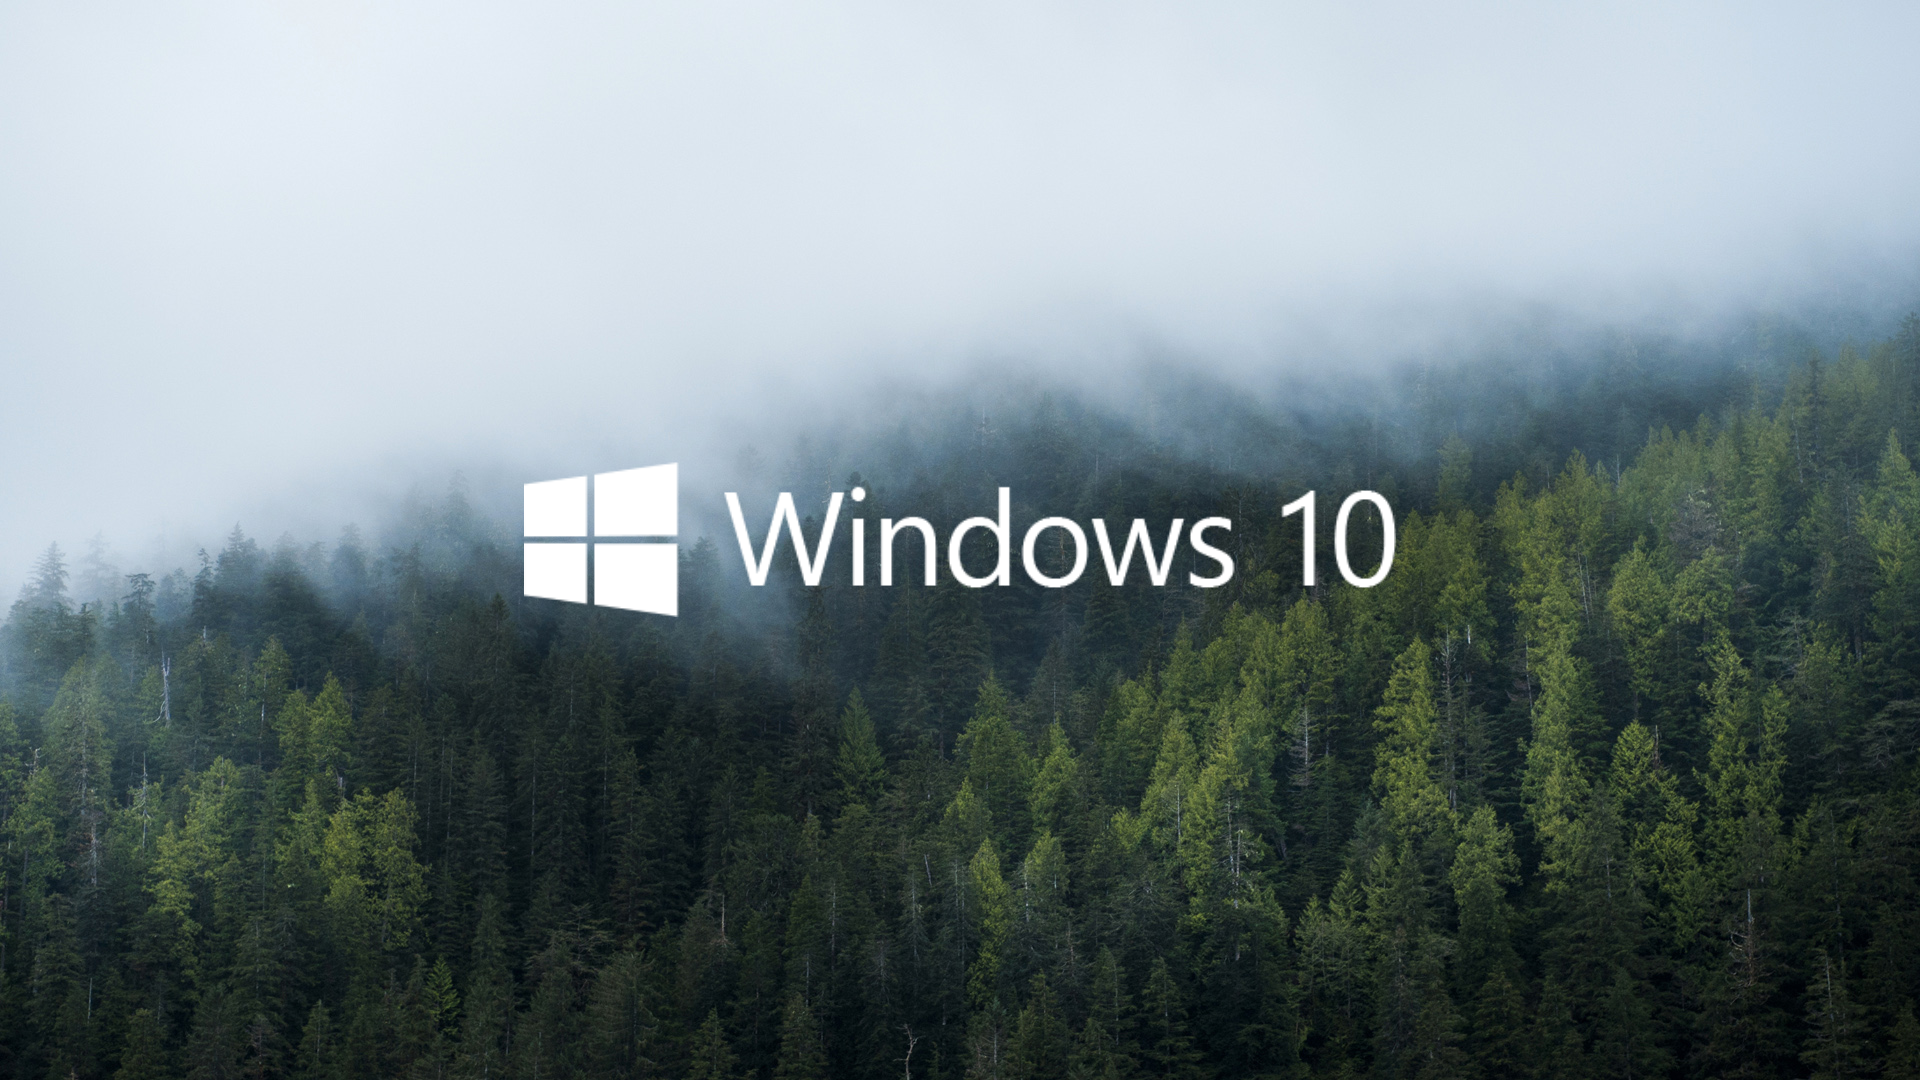 Картинки виндовс 10. Обои Windows. Виндокюус 10. Фон Windows 10. Картинки Windows 10.